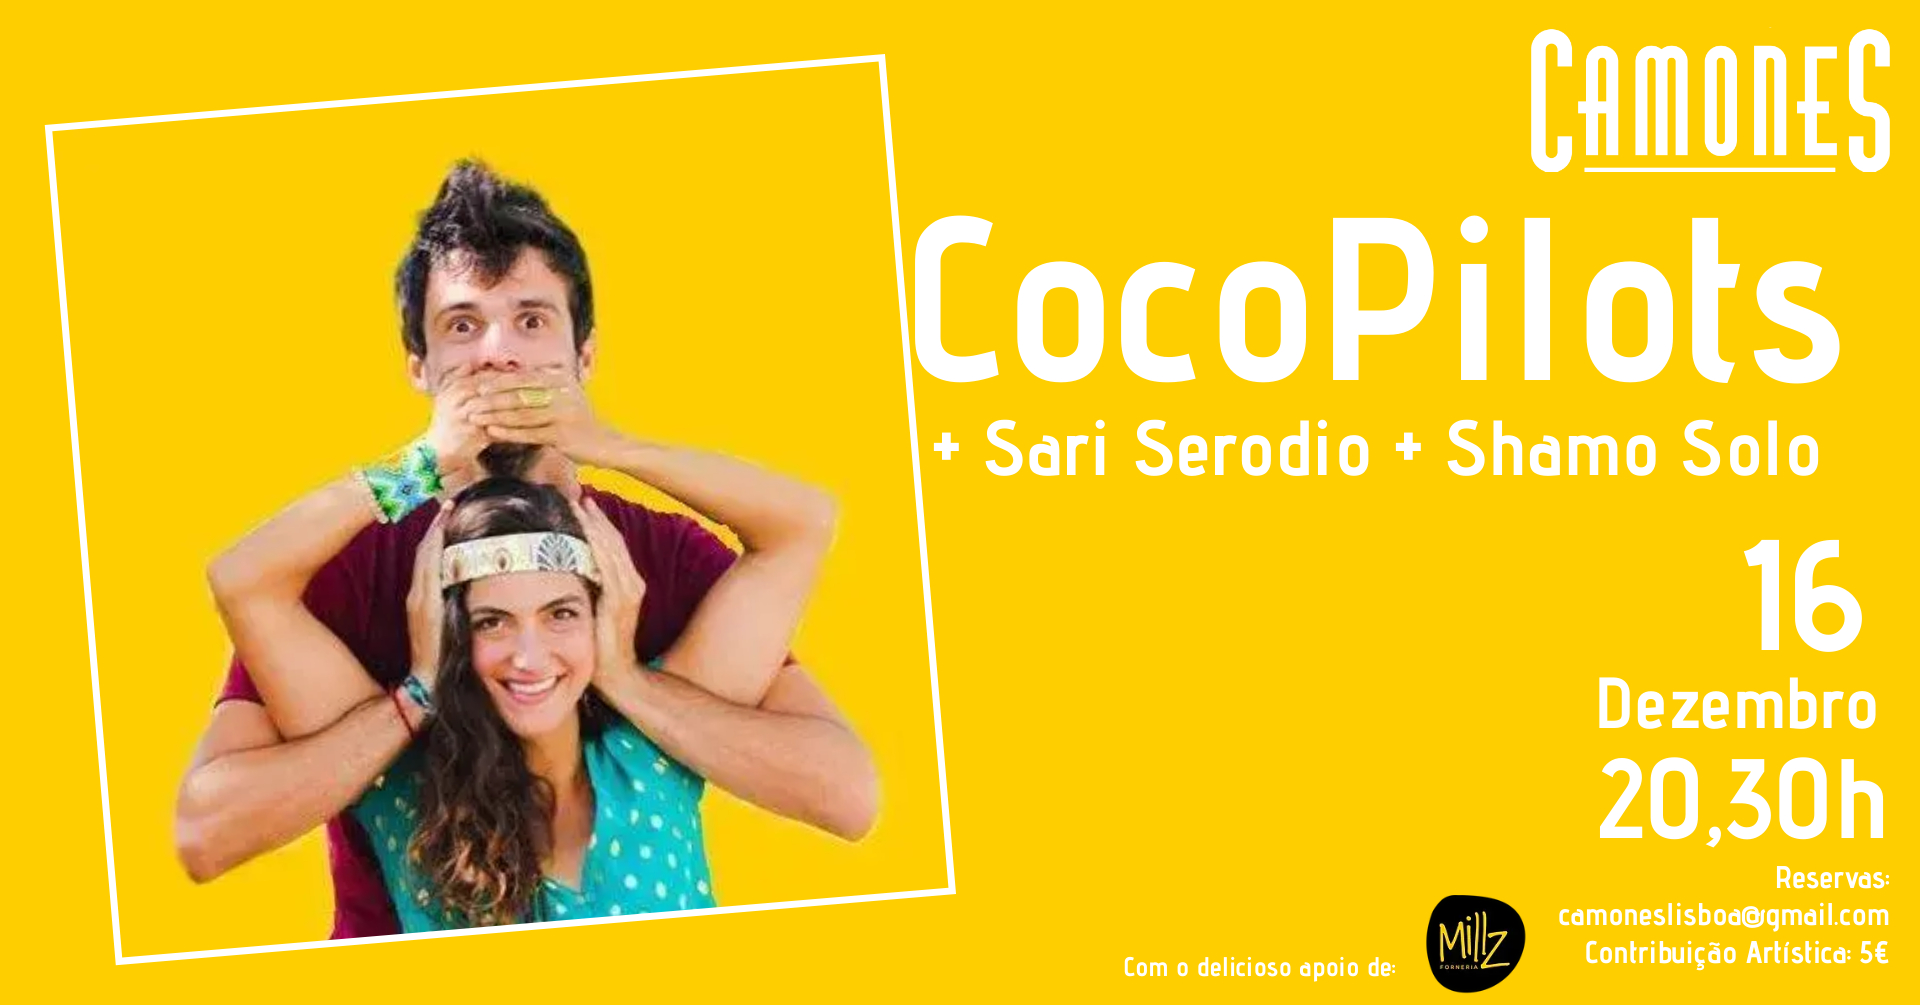 CocoPilots + Sari Serodio + Shamo Solo